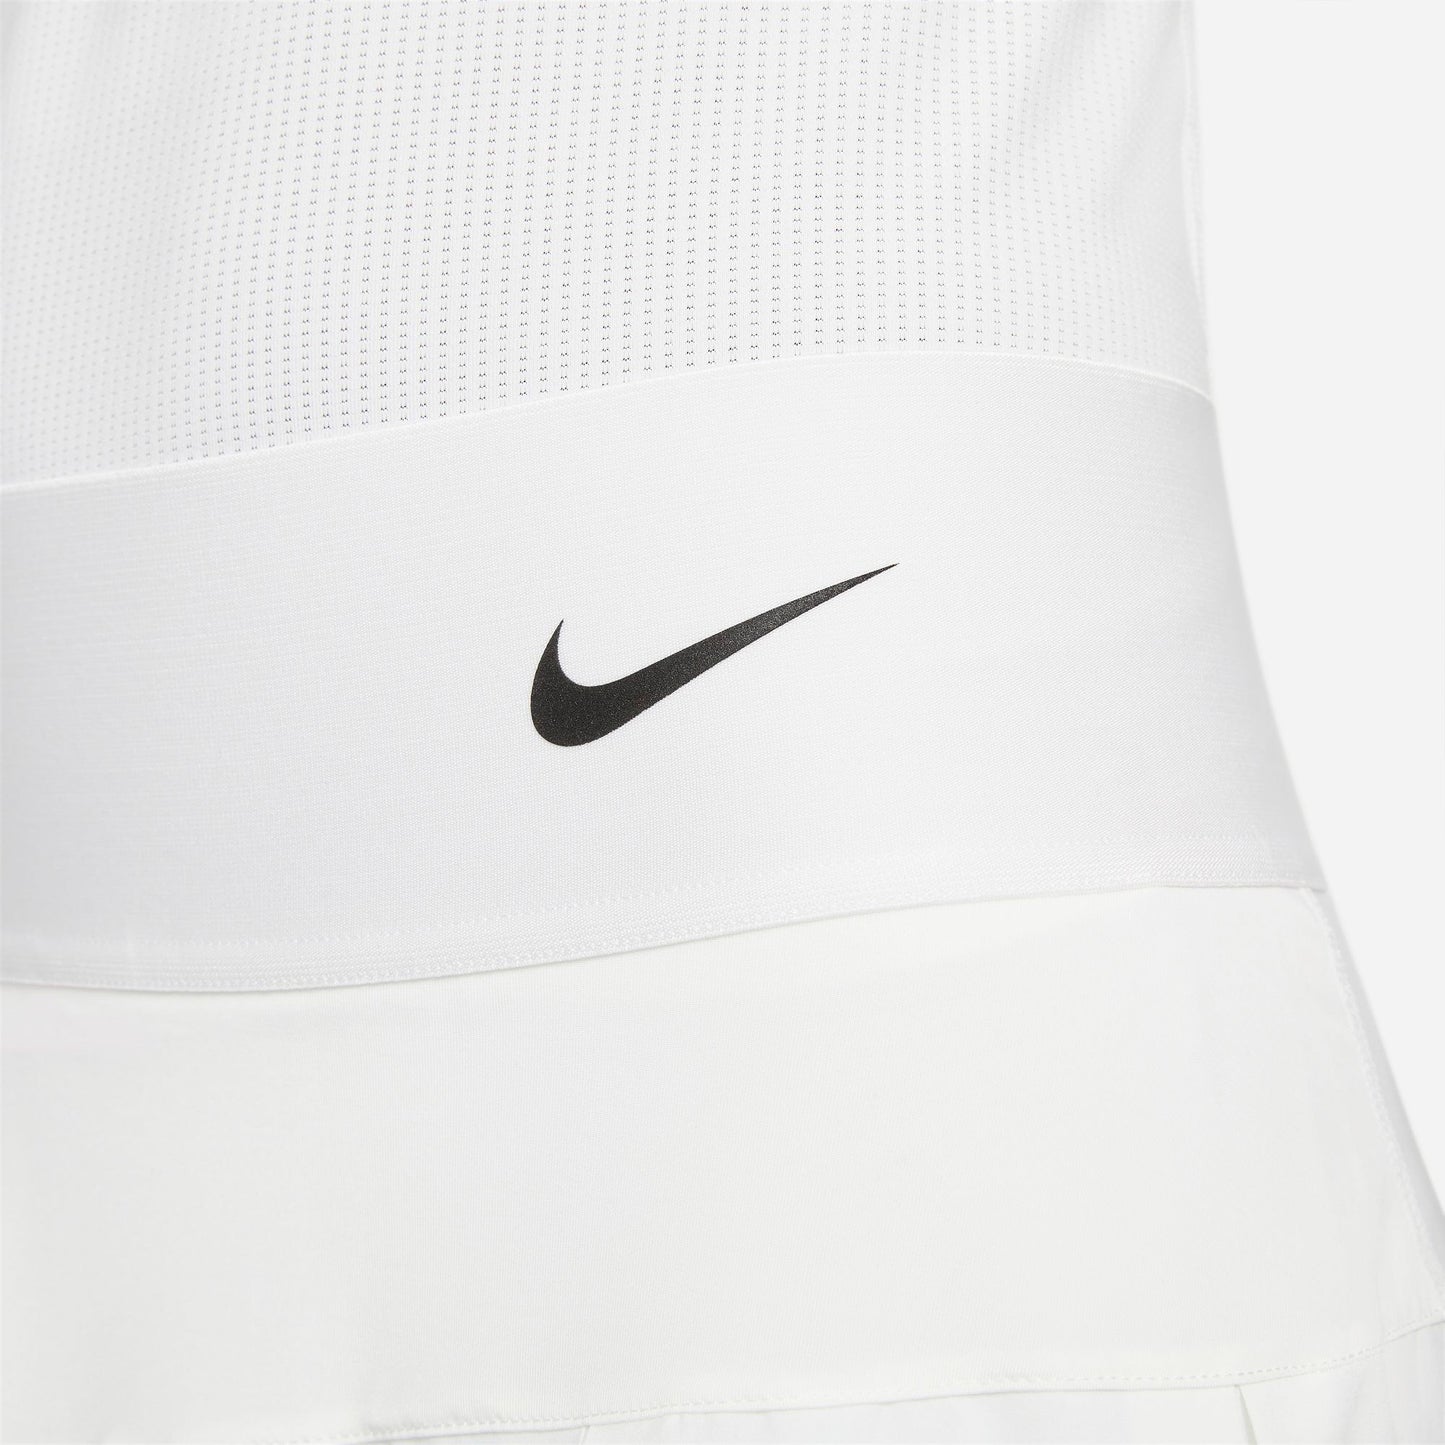 Nike Dri-FIT Advantage Women's Tennis Skirt White (5)